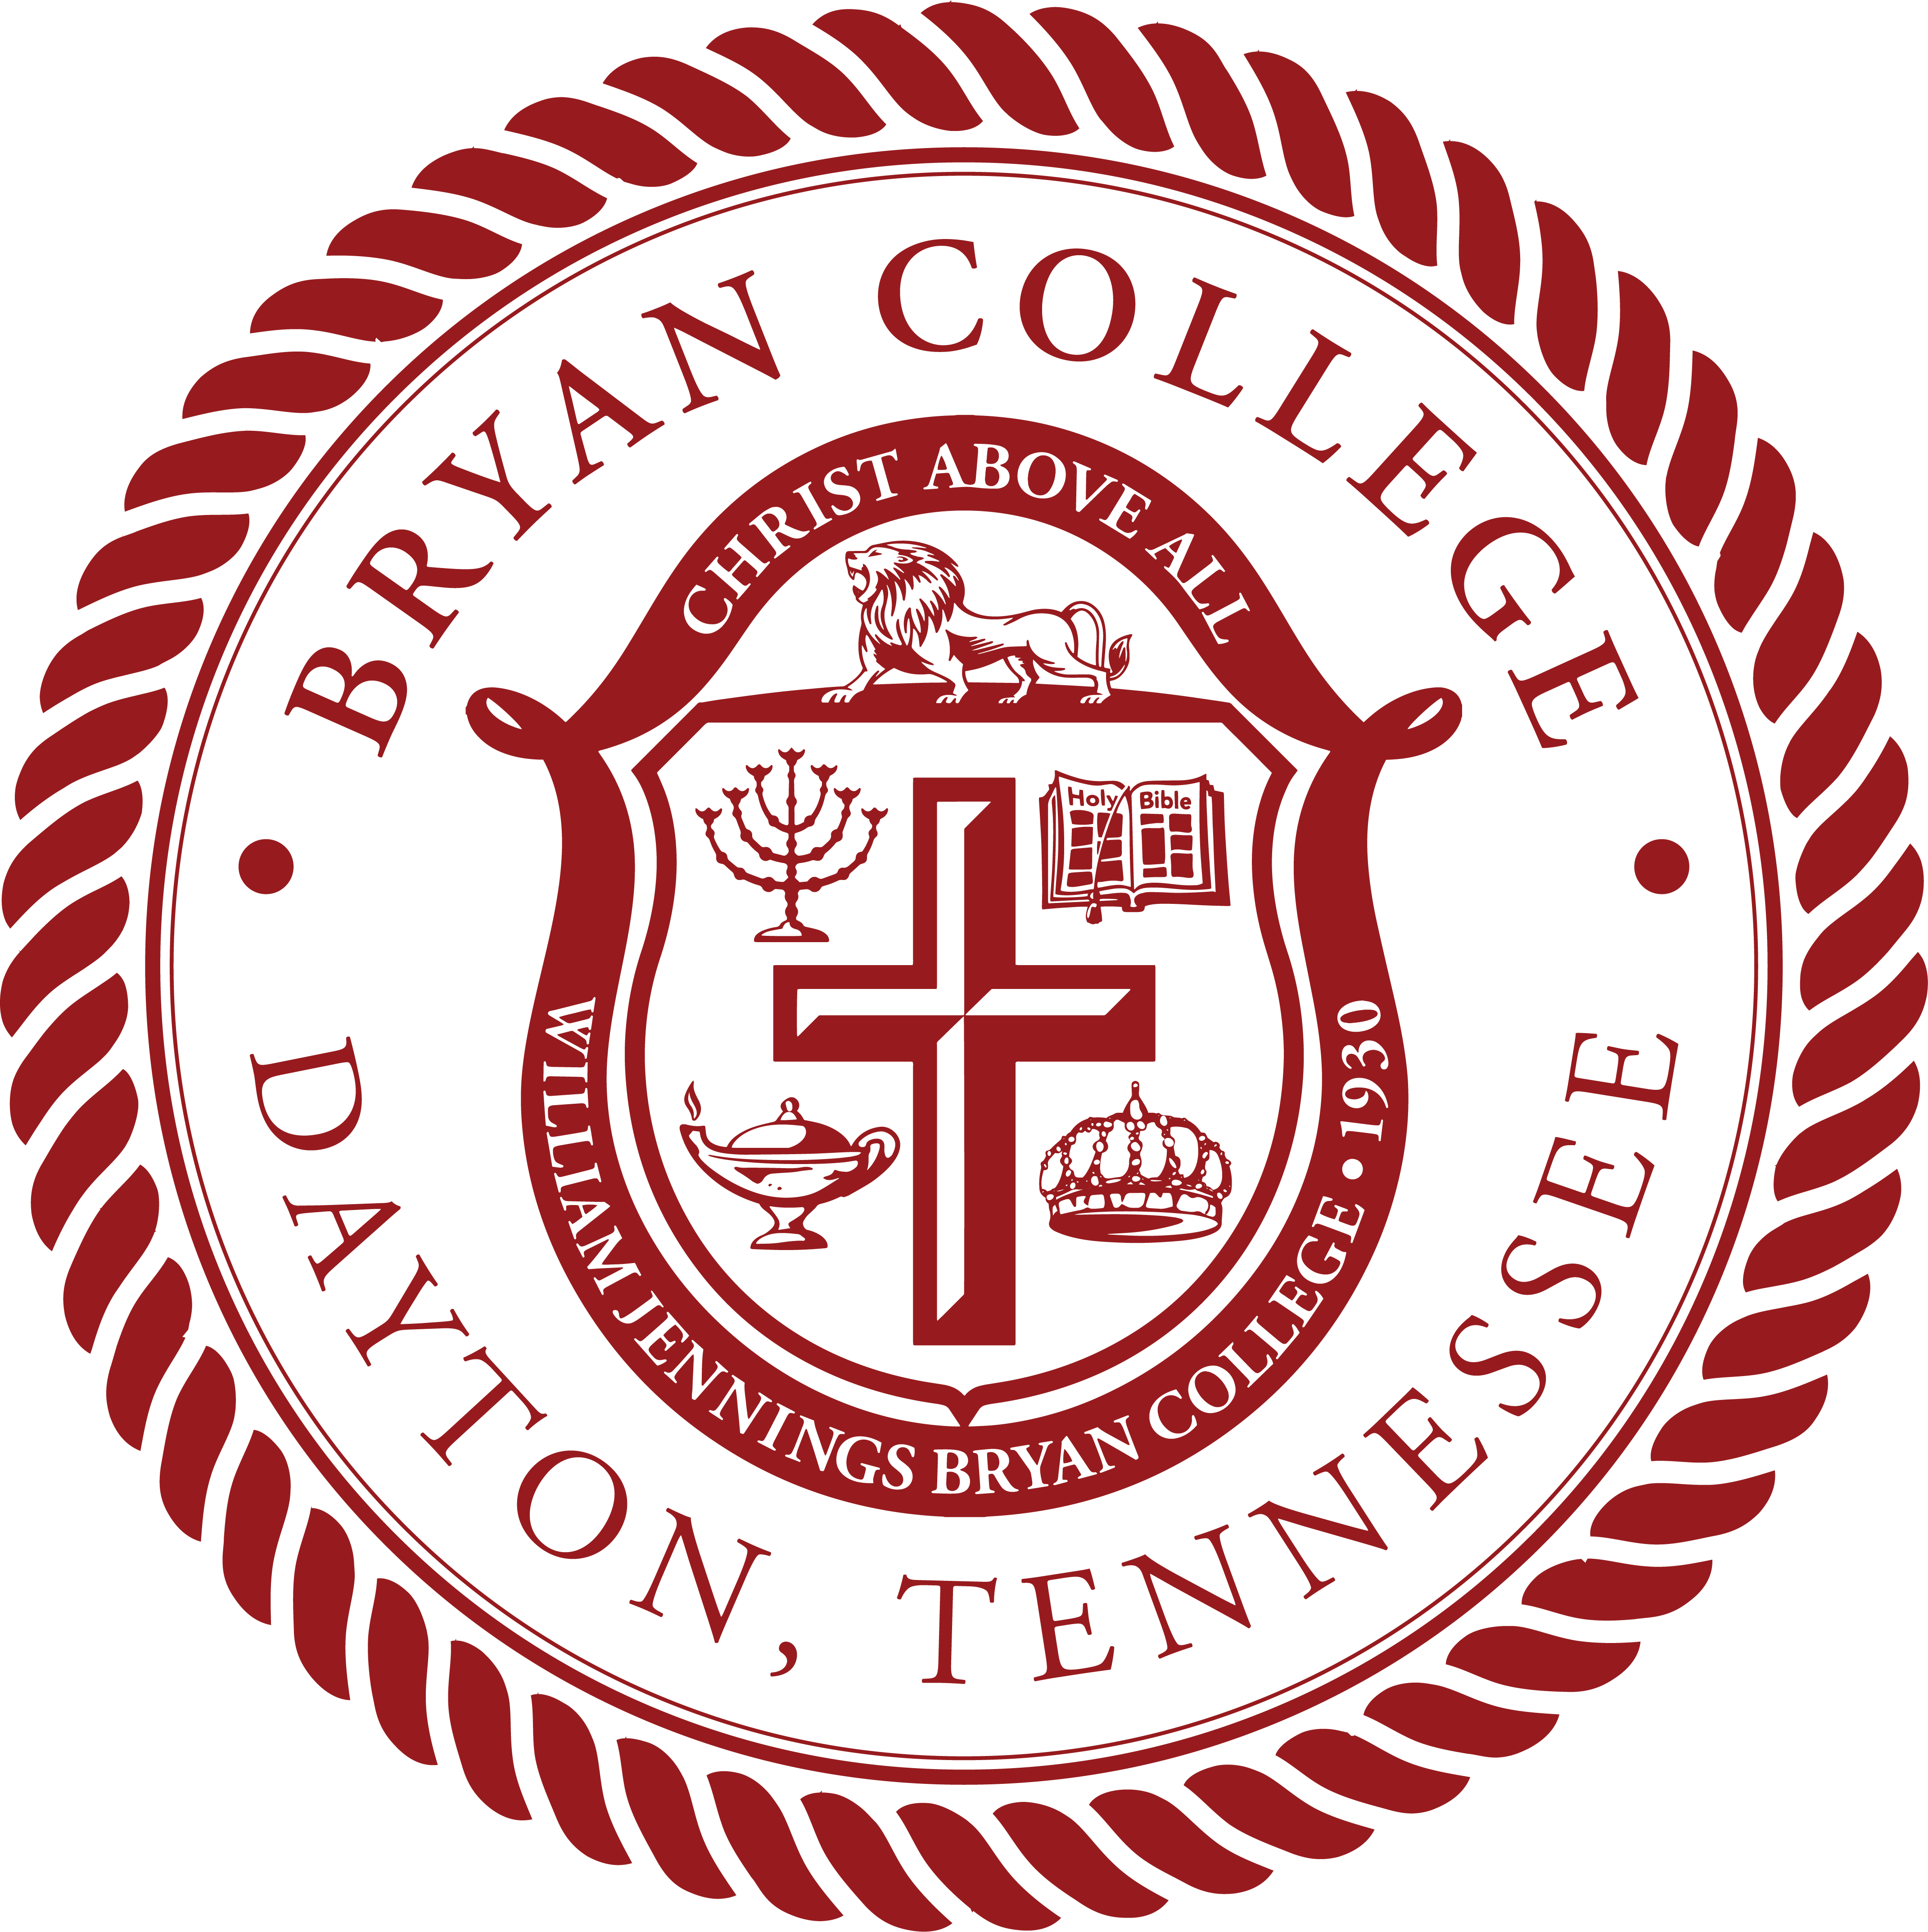 Bryan College Degree Programs, Accreditation, Applying, Tuition